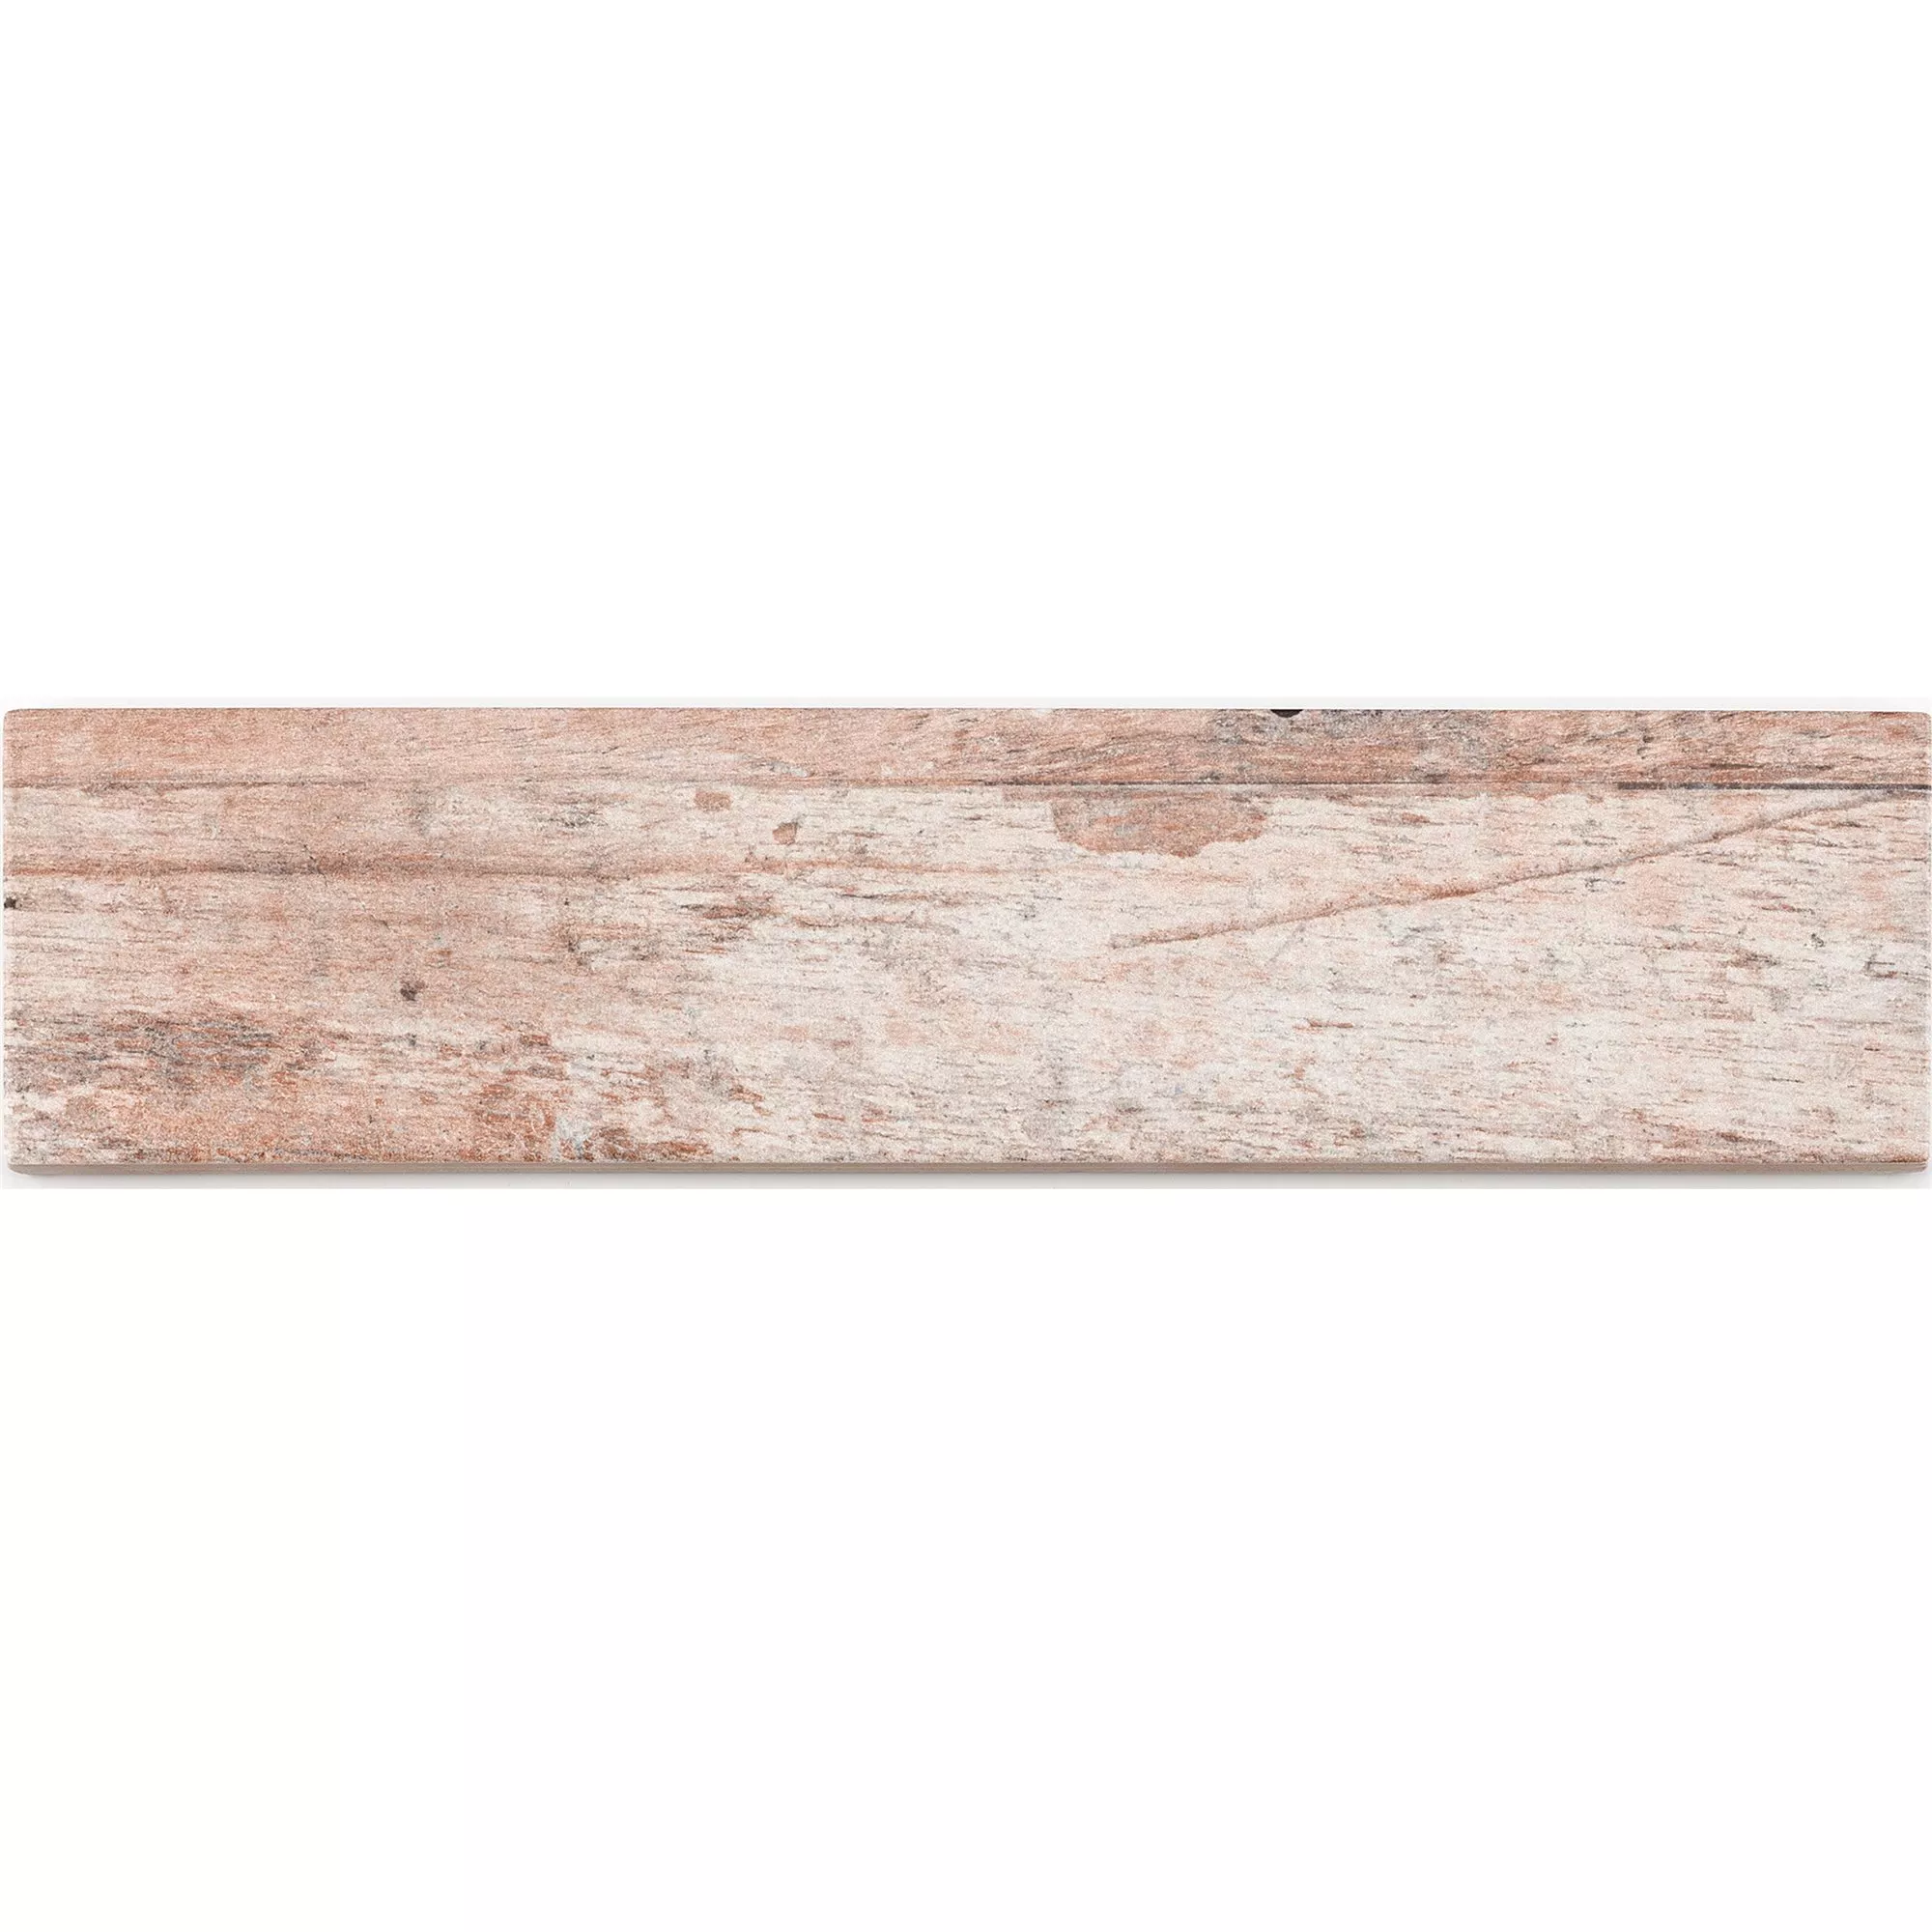 Vzorek Podlahové Dlaždice Freedom Dřevo Vintage Look 7x28cm